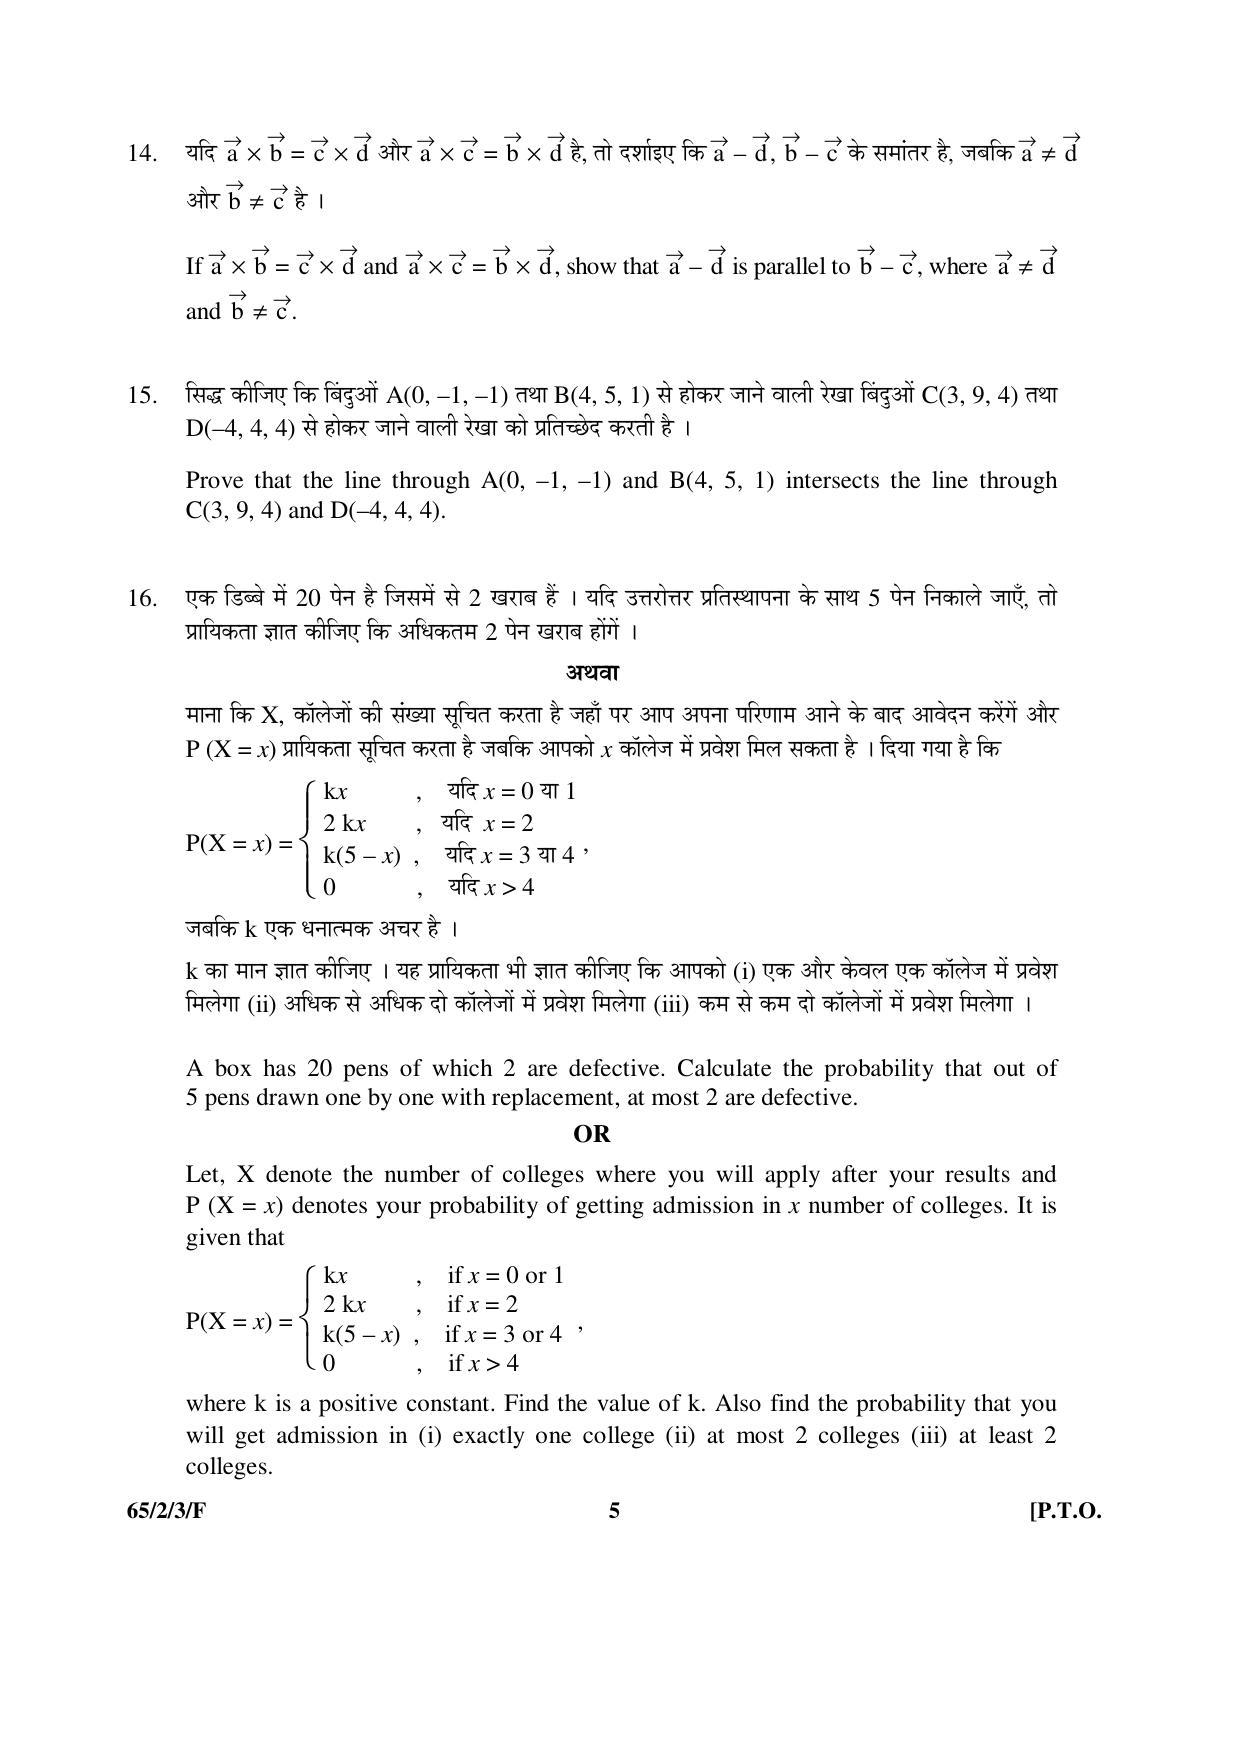 CBSE Class 12 65-2-3-F _Mathematics_ 2016 Question Paper - Page 5